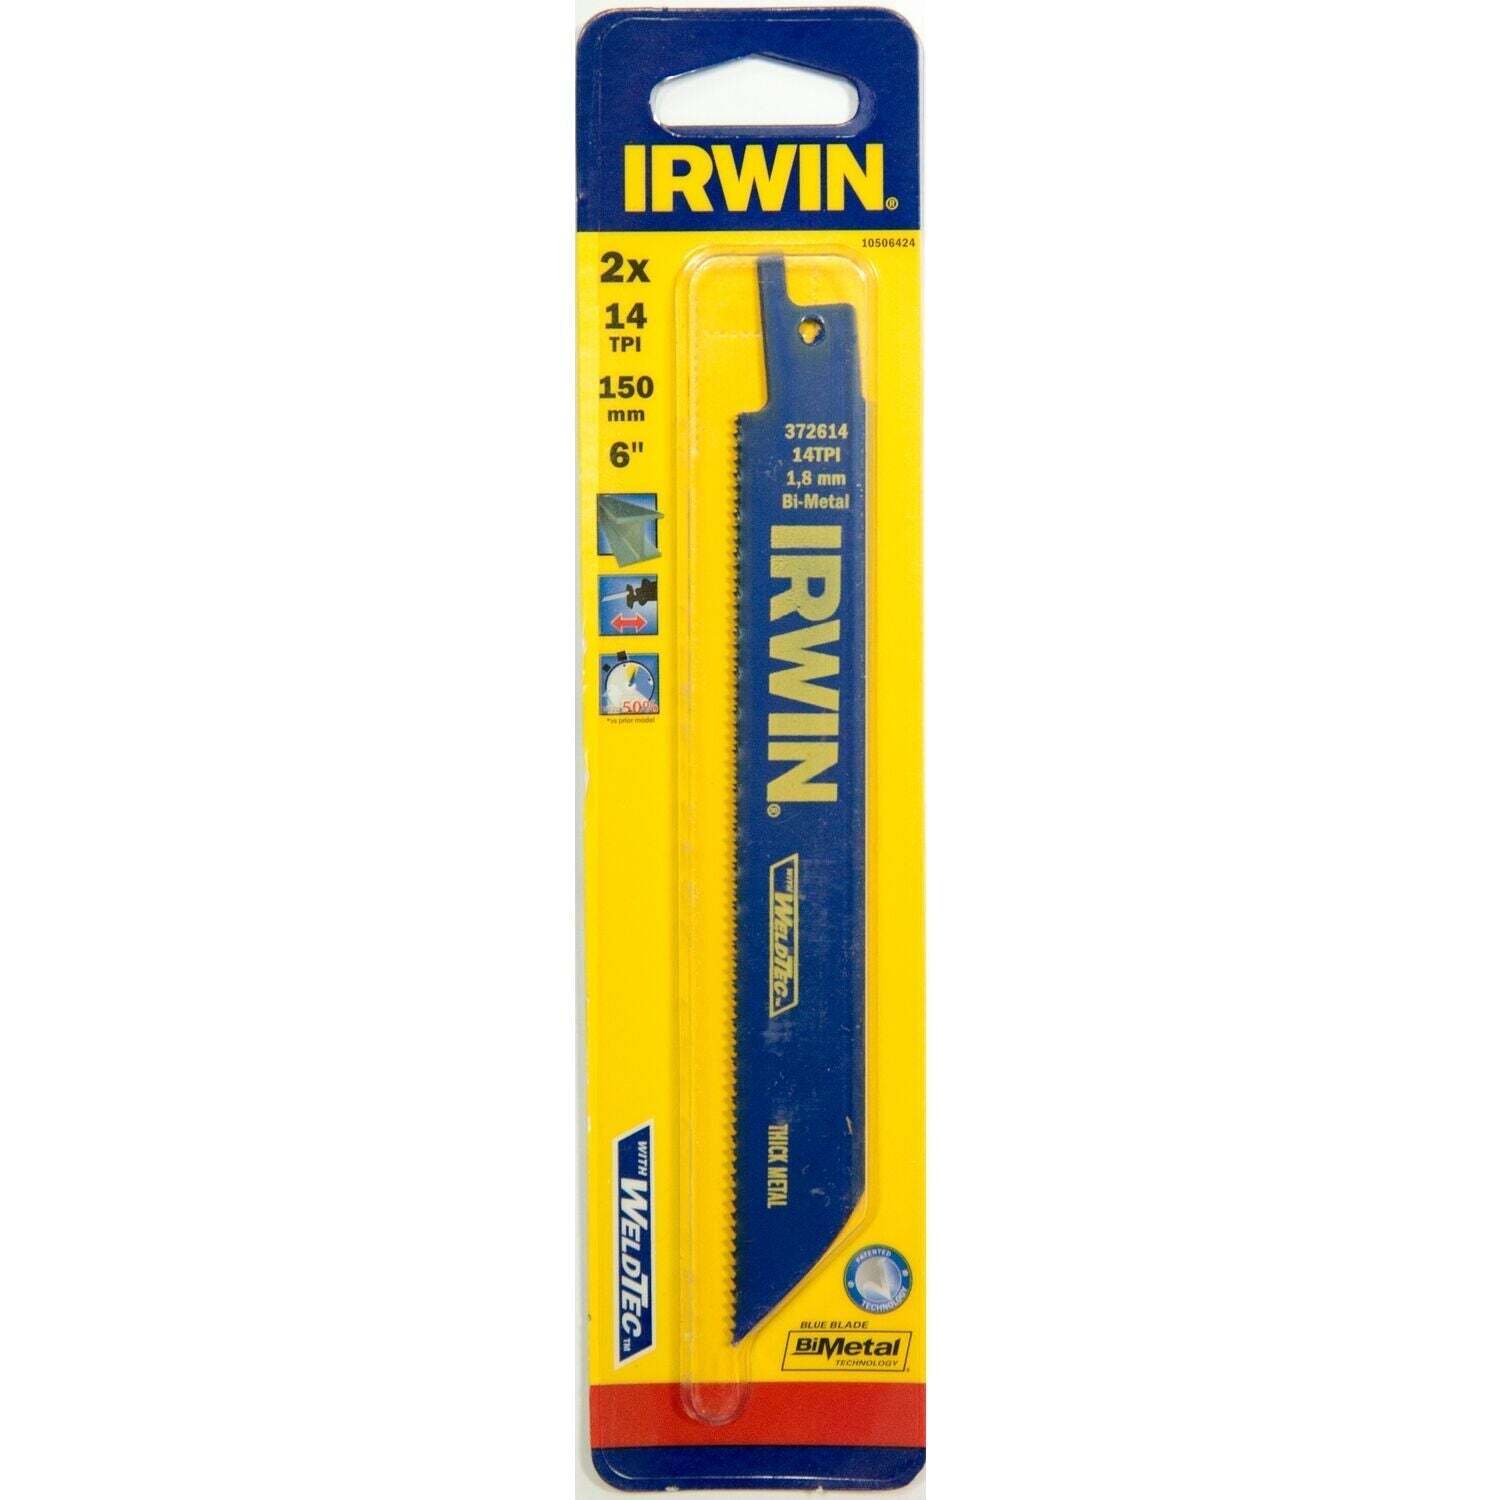 Irwin 614R 6" / 150 mm 14TPI, Metaalzagen - 10506424